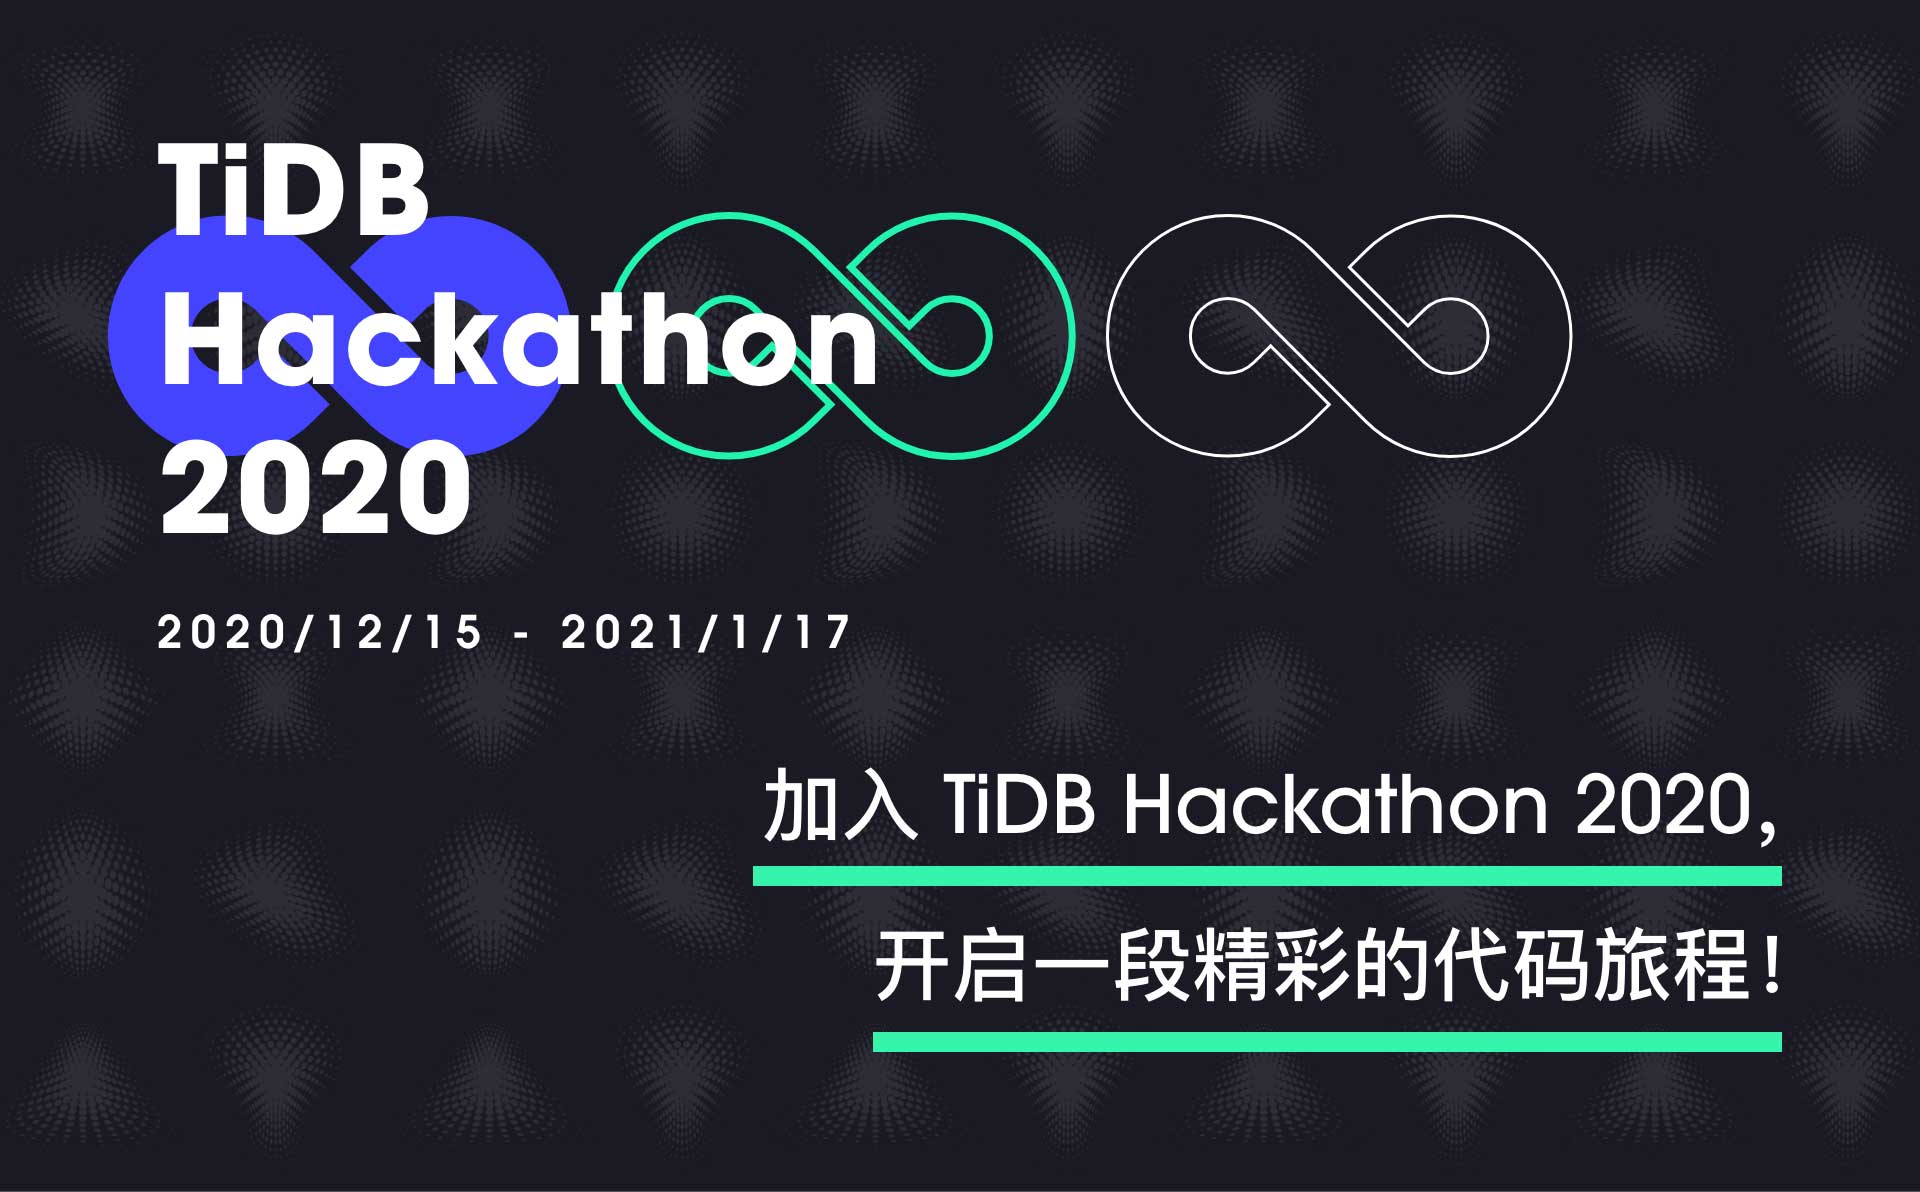 TiDB Hackathon 2020